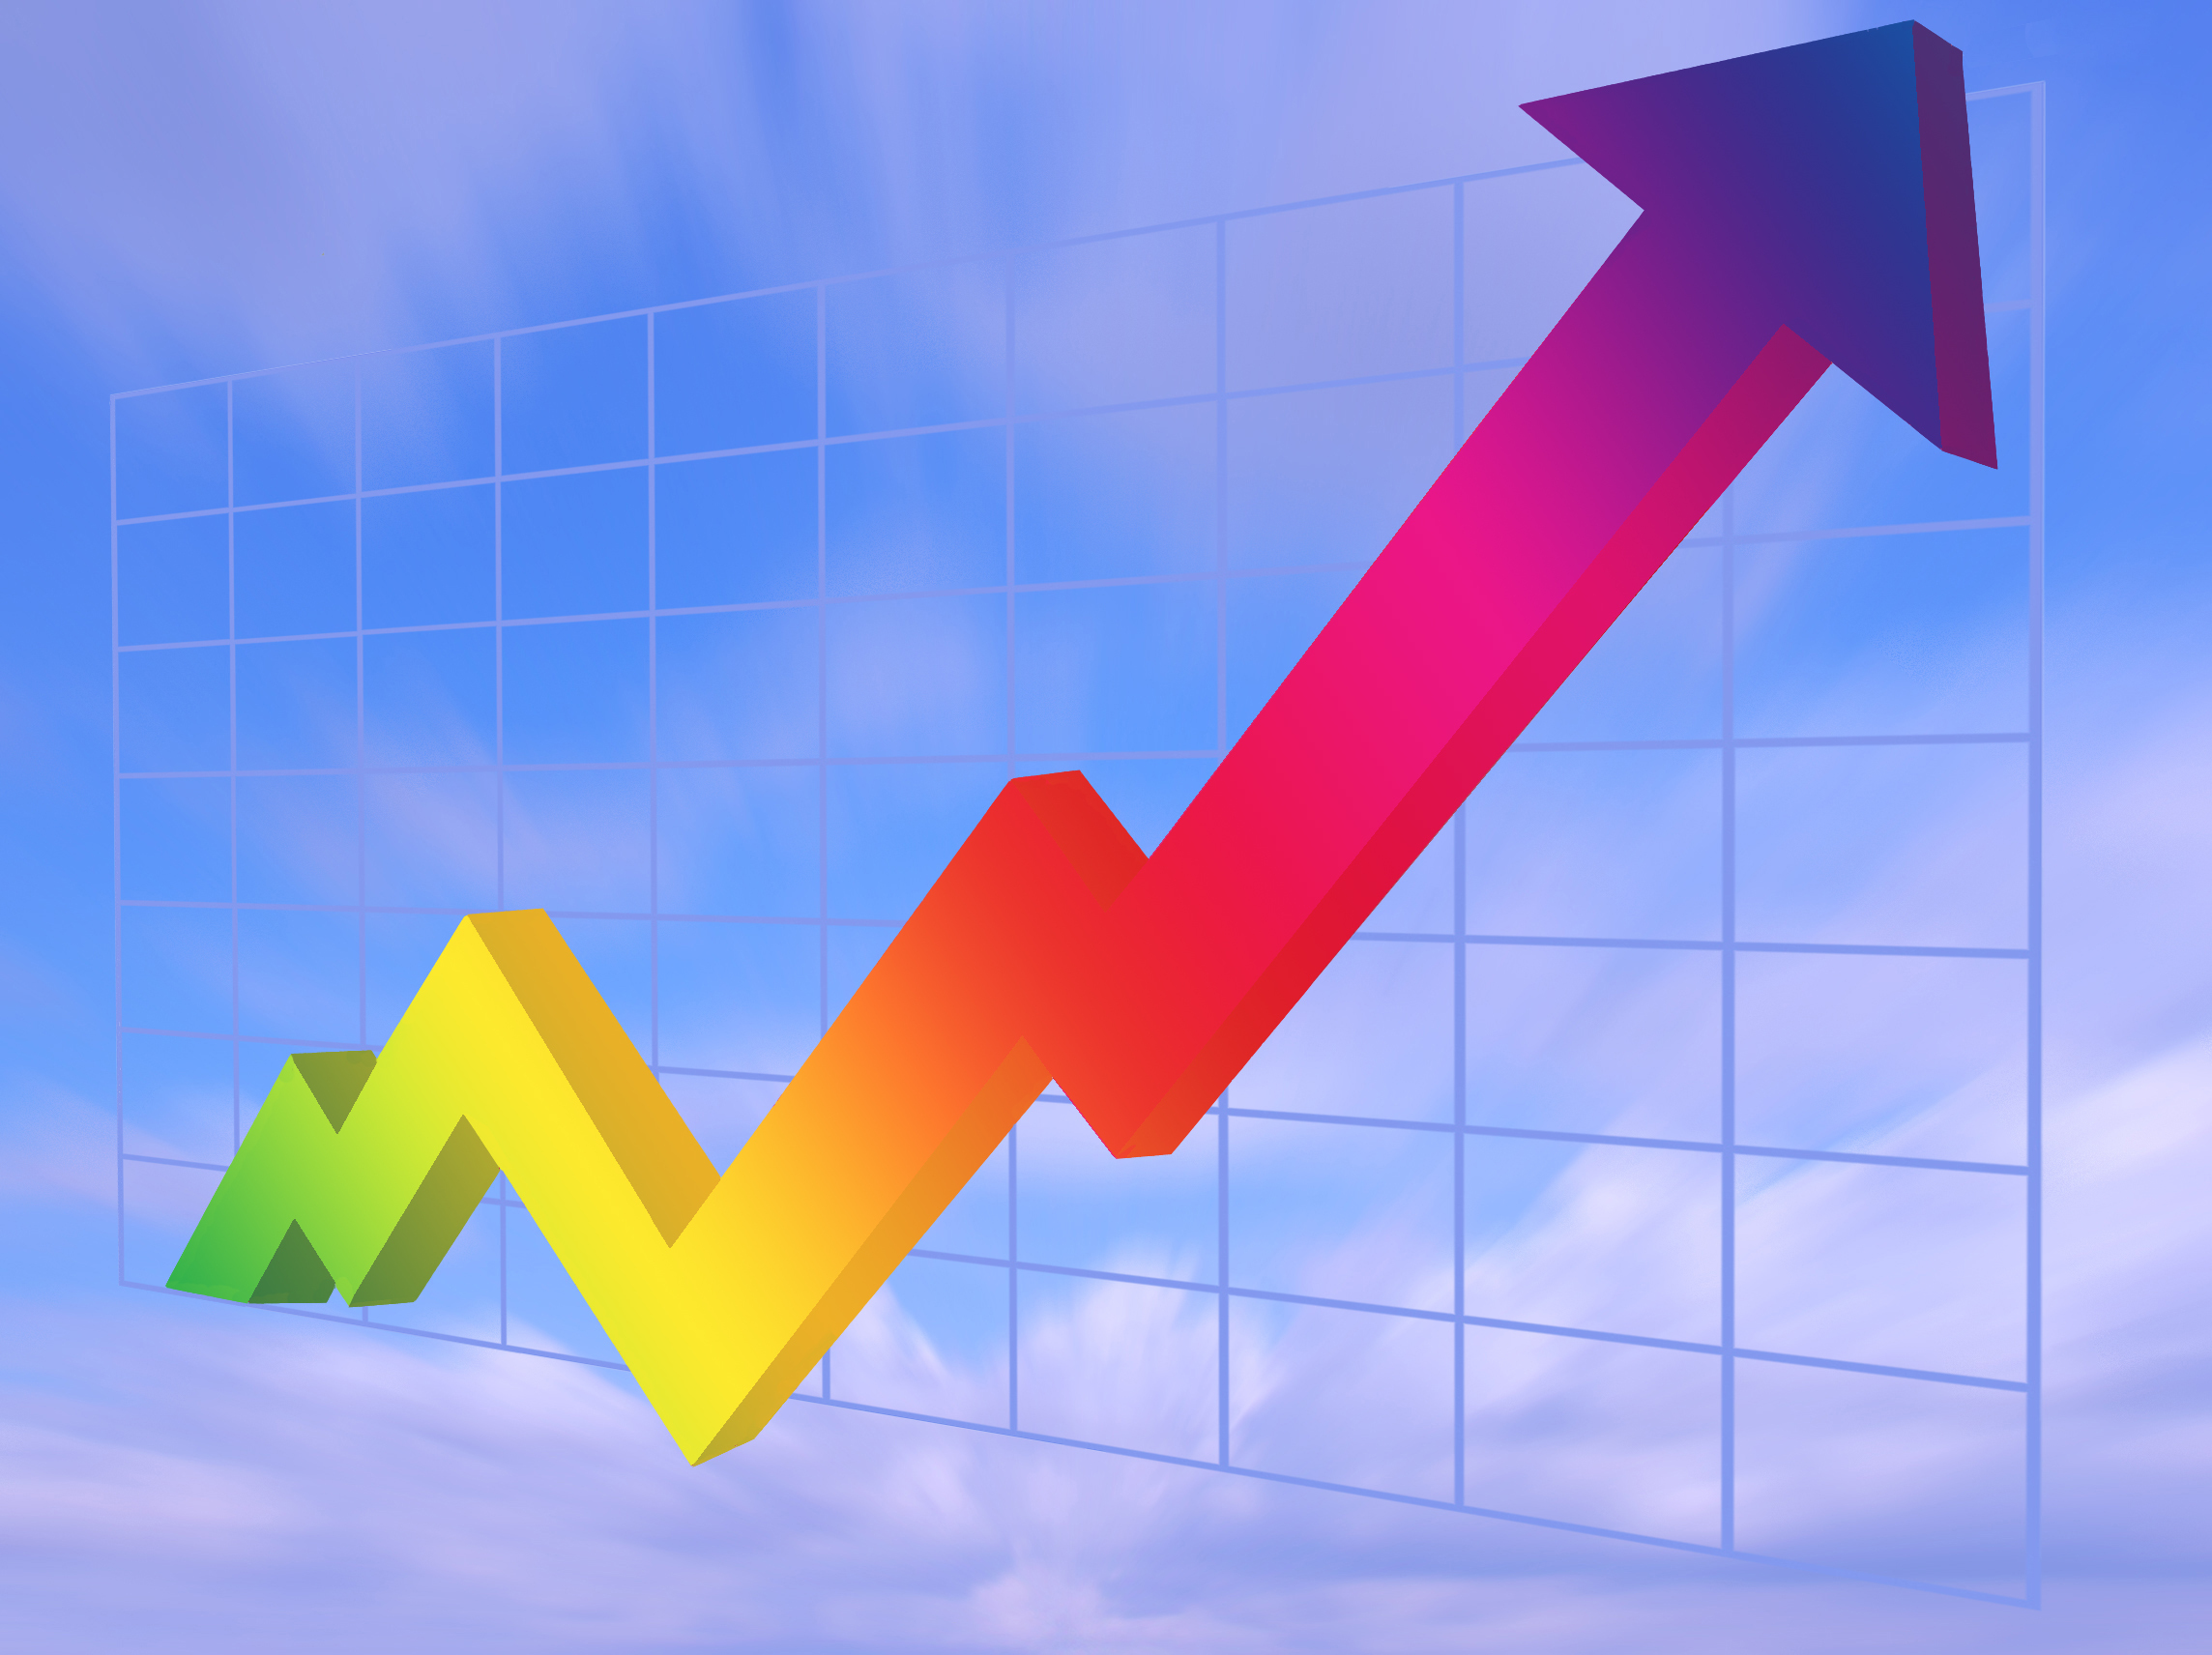 Arrow pointing up, Stock price increasing, Bullish stock price movement